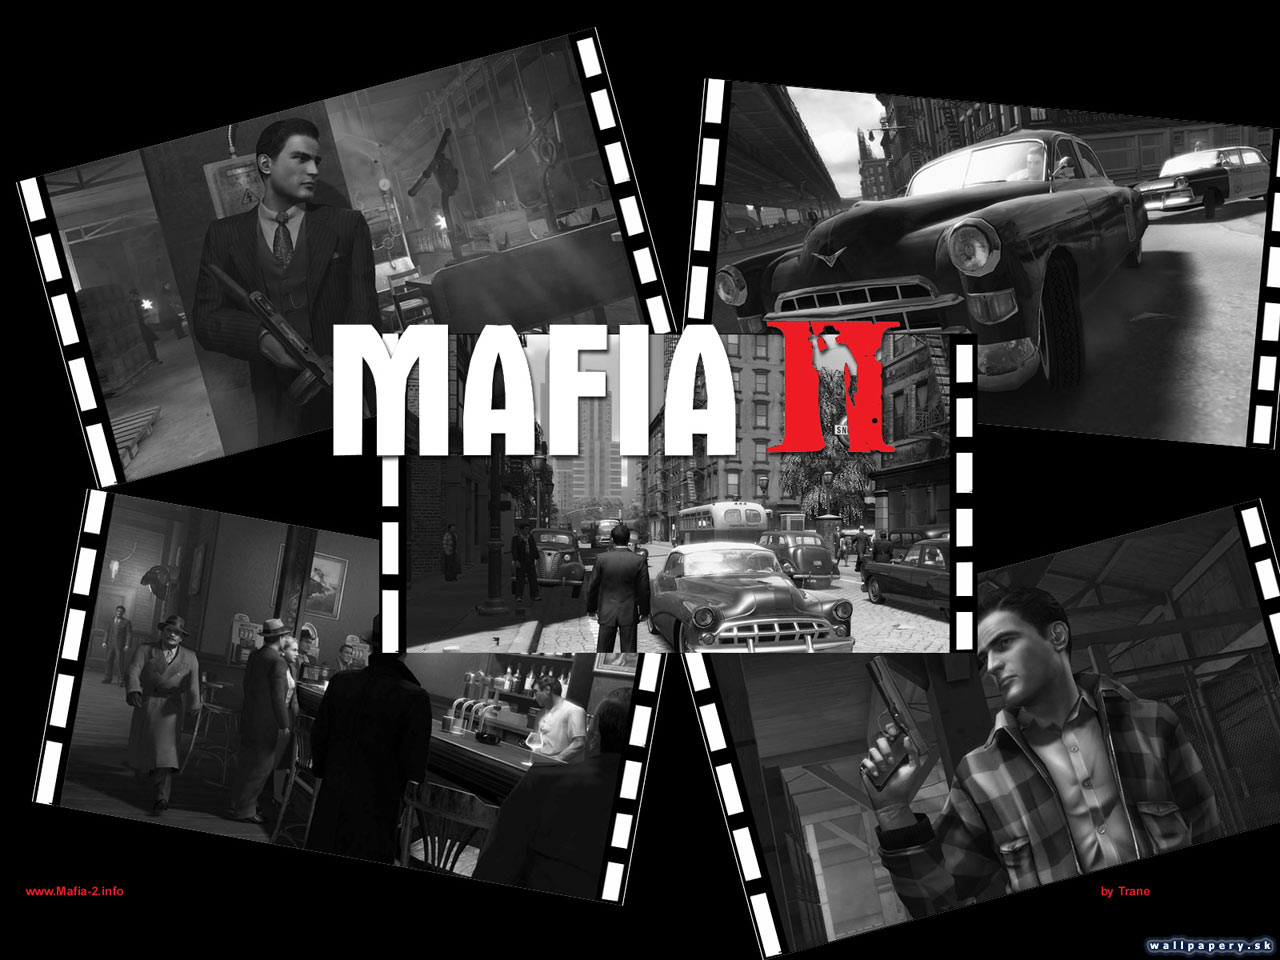 Download full size Mafia 2 wallpaper / Games / 1280x960